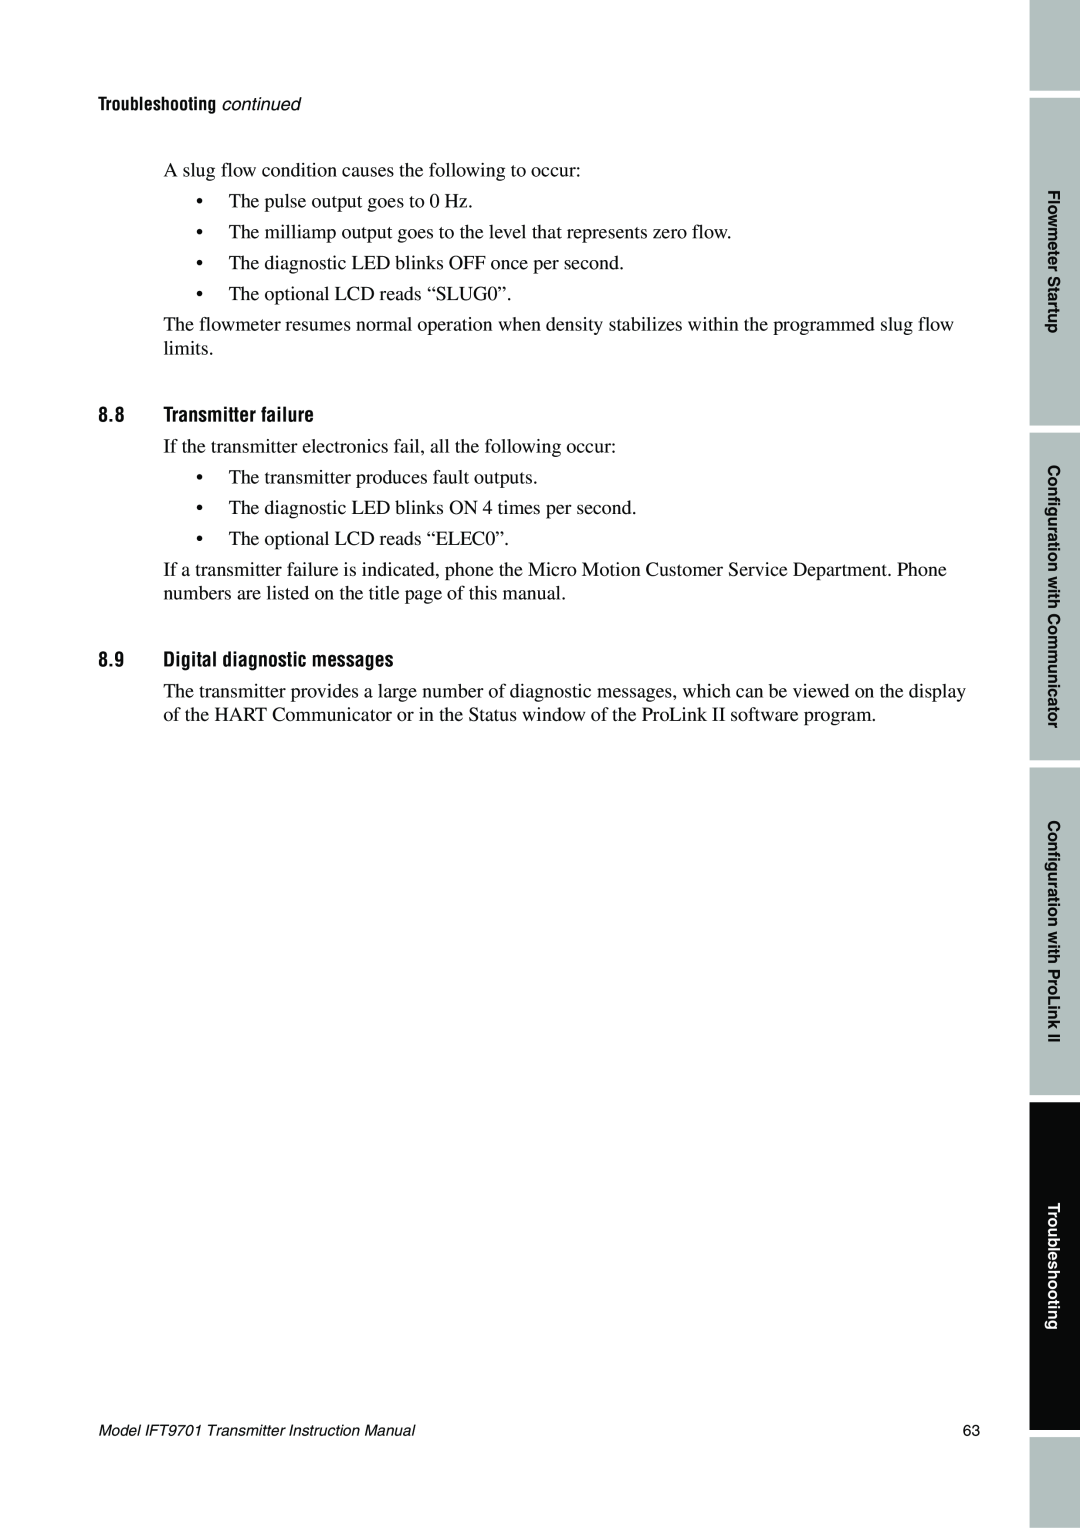 Emerson IFT9701 instruction manual 8.8Transmitter failure, 8.9Digital diagnostic messages 